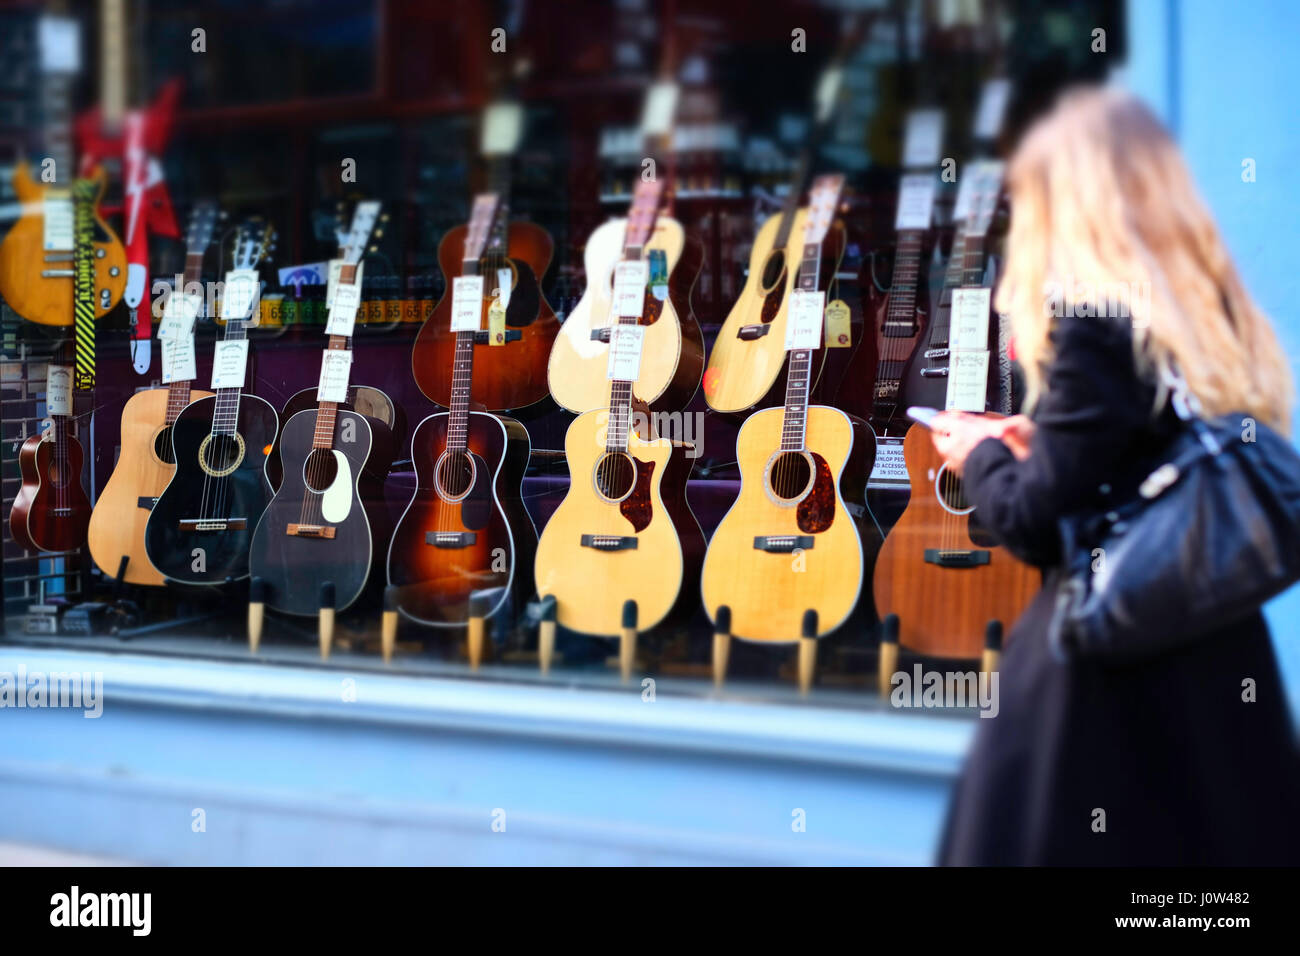 Guitar shop, Denmark Street, London, United Kingdom Photo Stock - Alamy